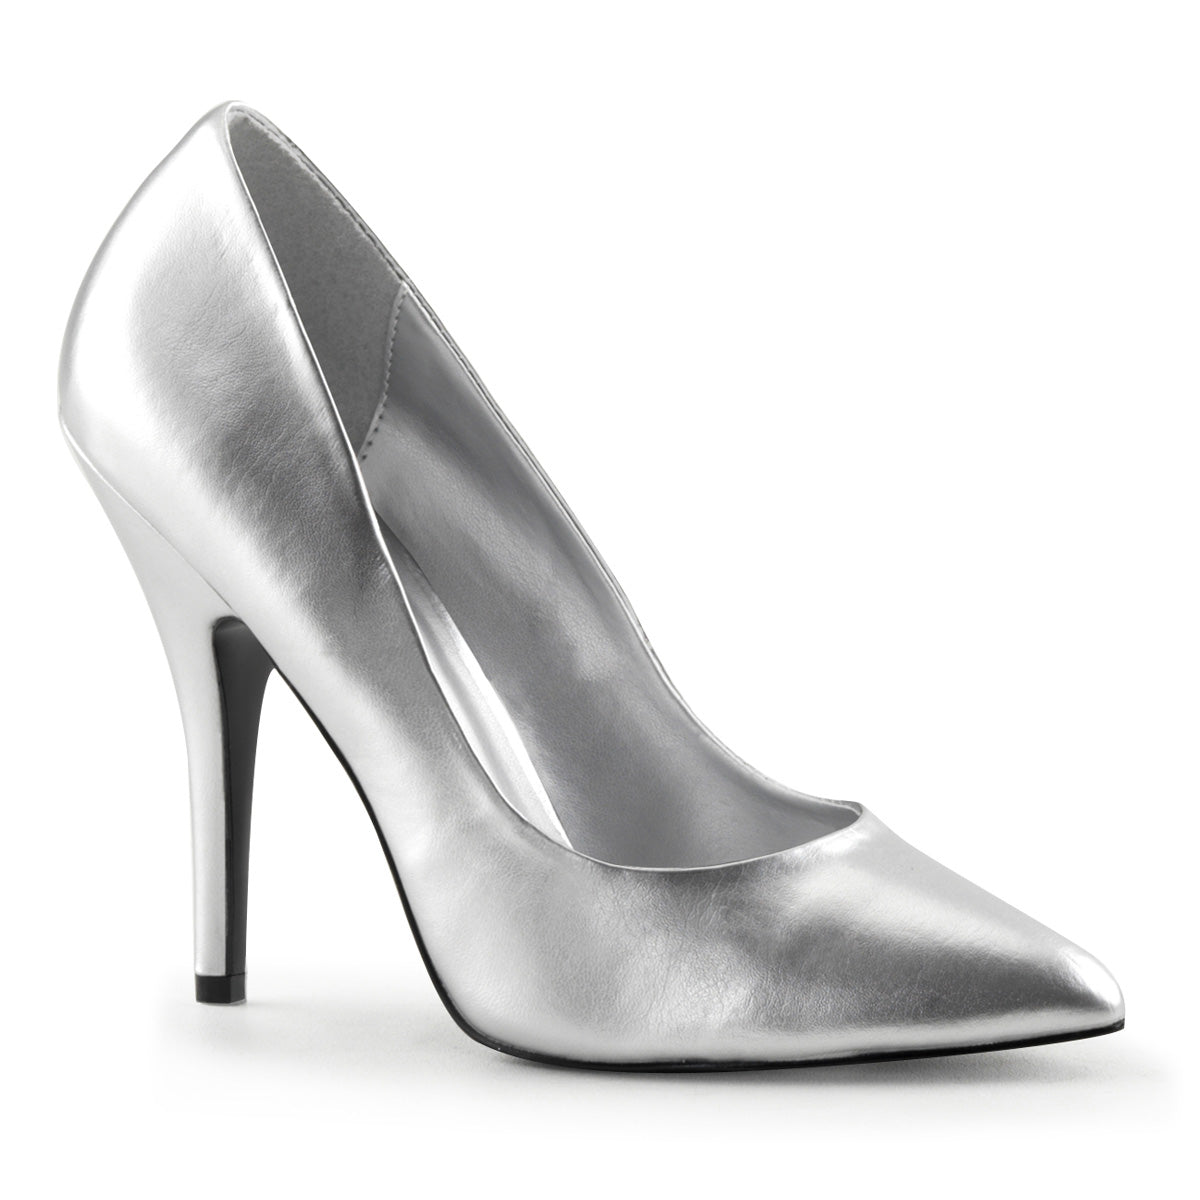 SEDUCE-420 Pleasers Sexy Shoes 5" Heel Silver Fetish Footwear